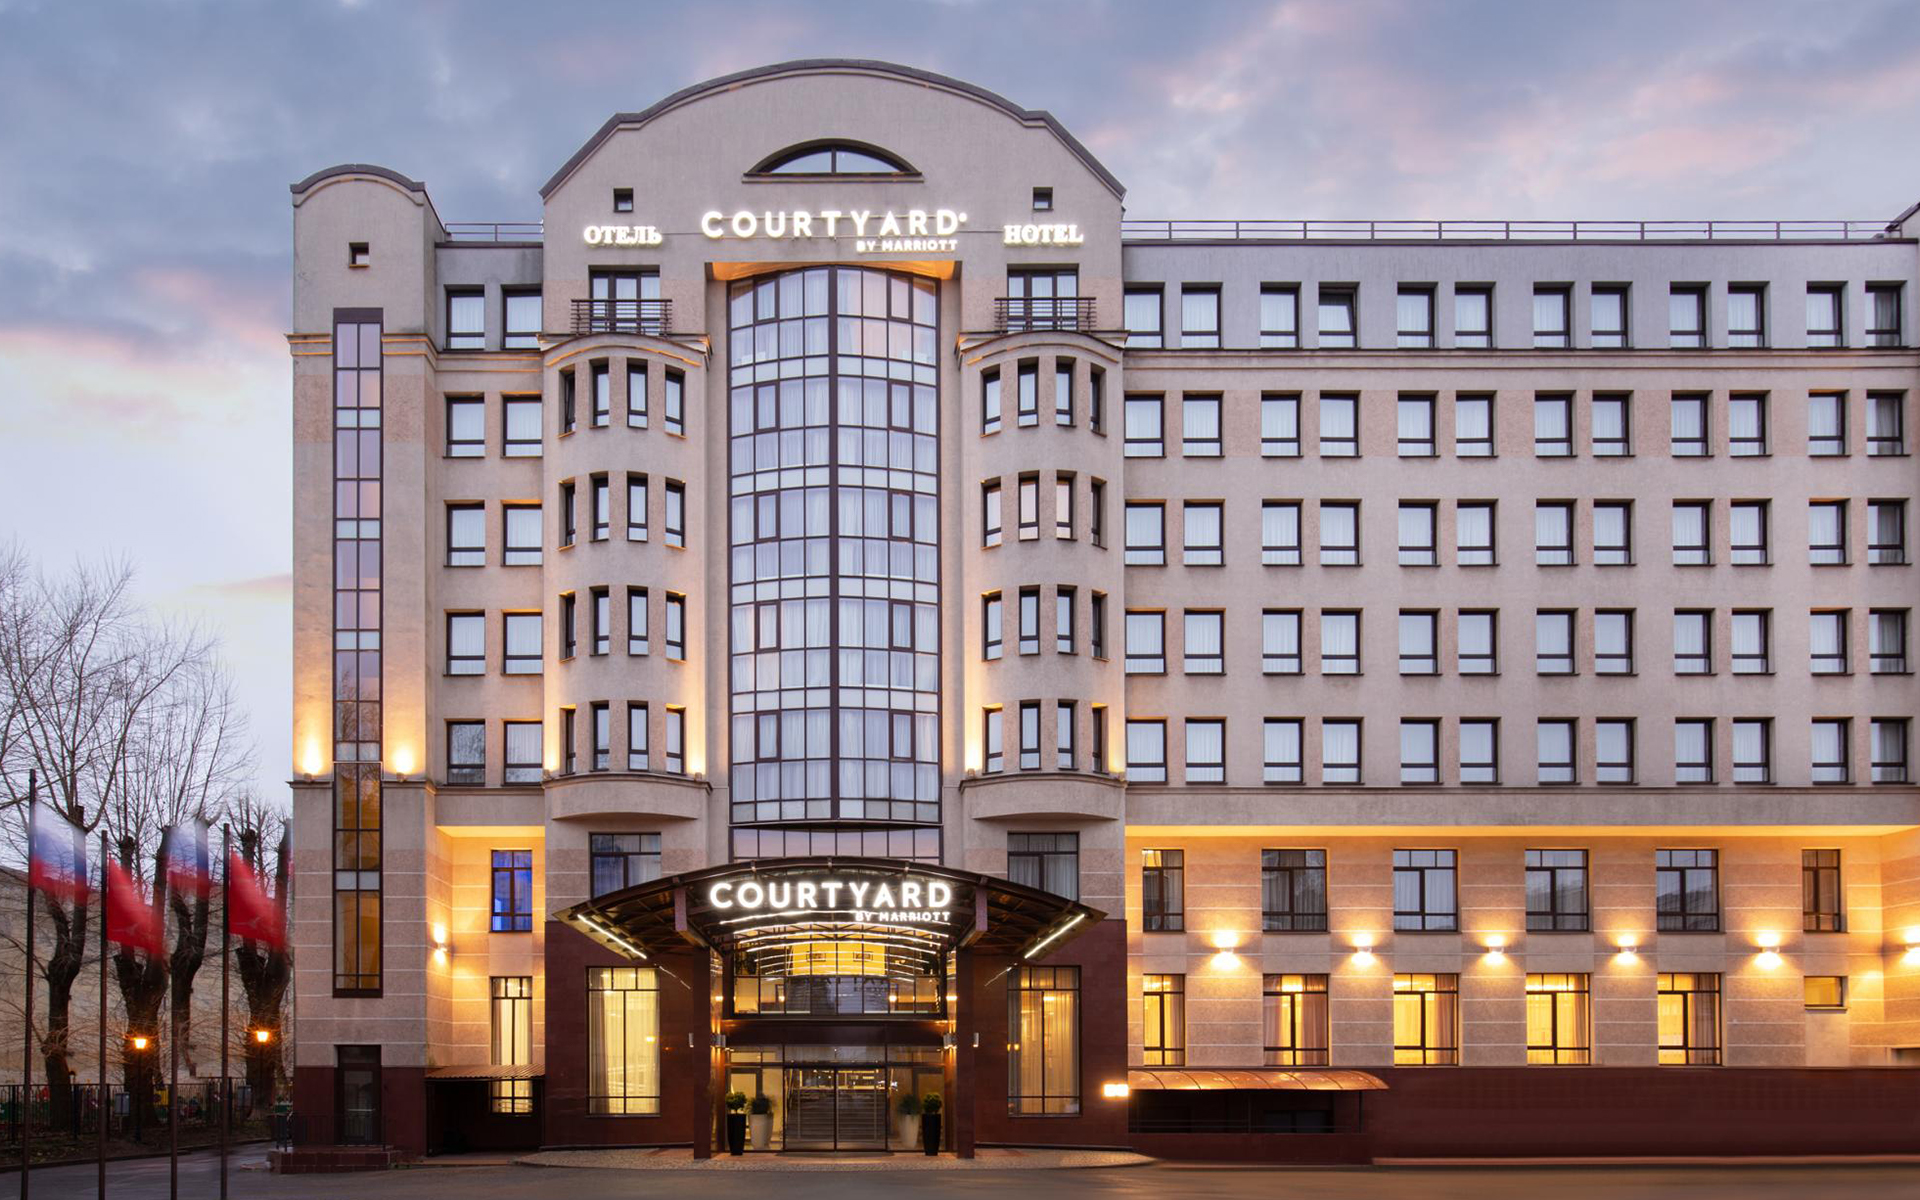 “COURTYARD” Hotel